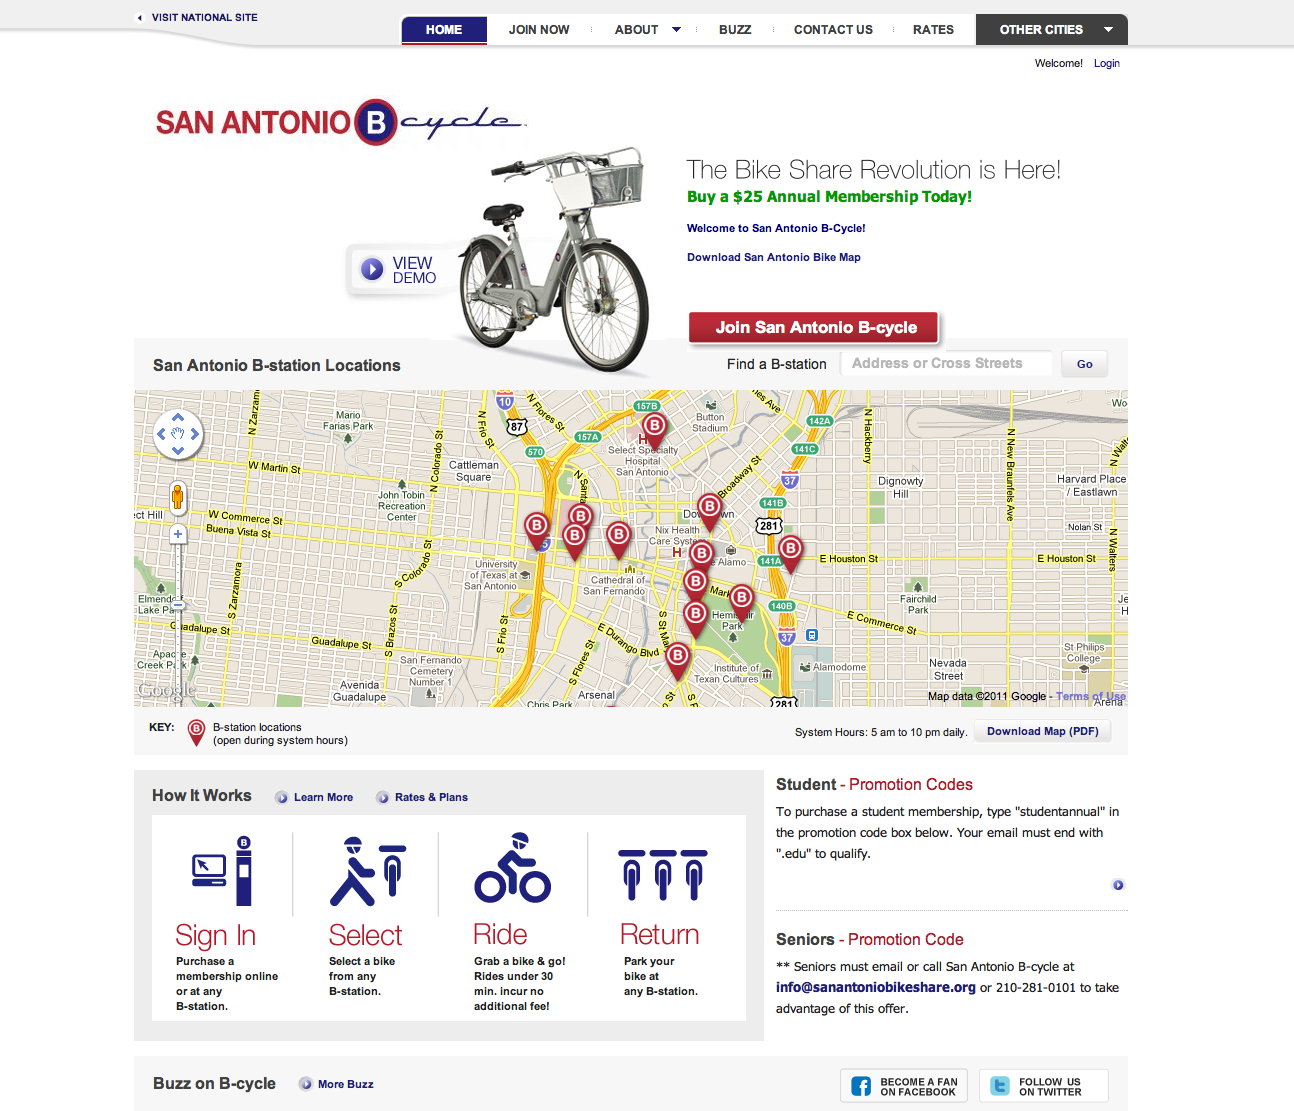 The San Antonio bike share website